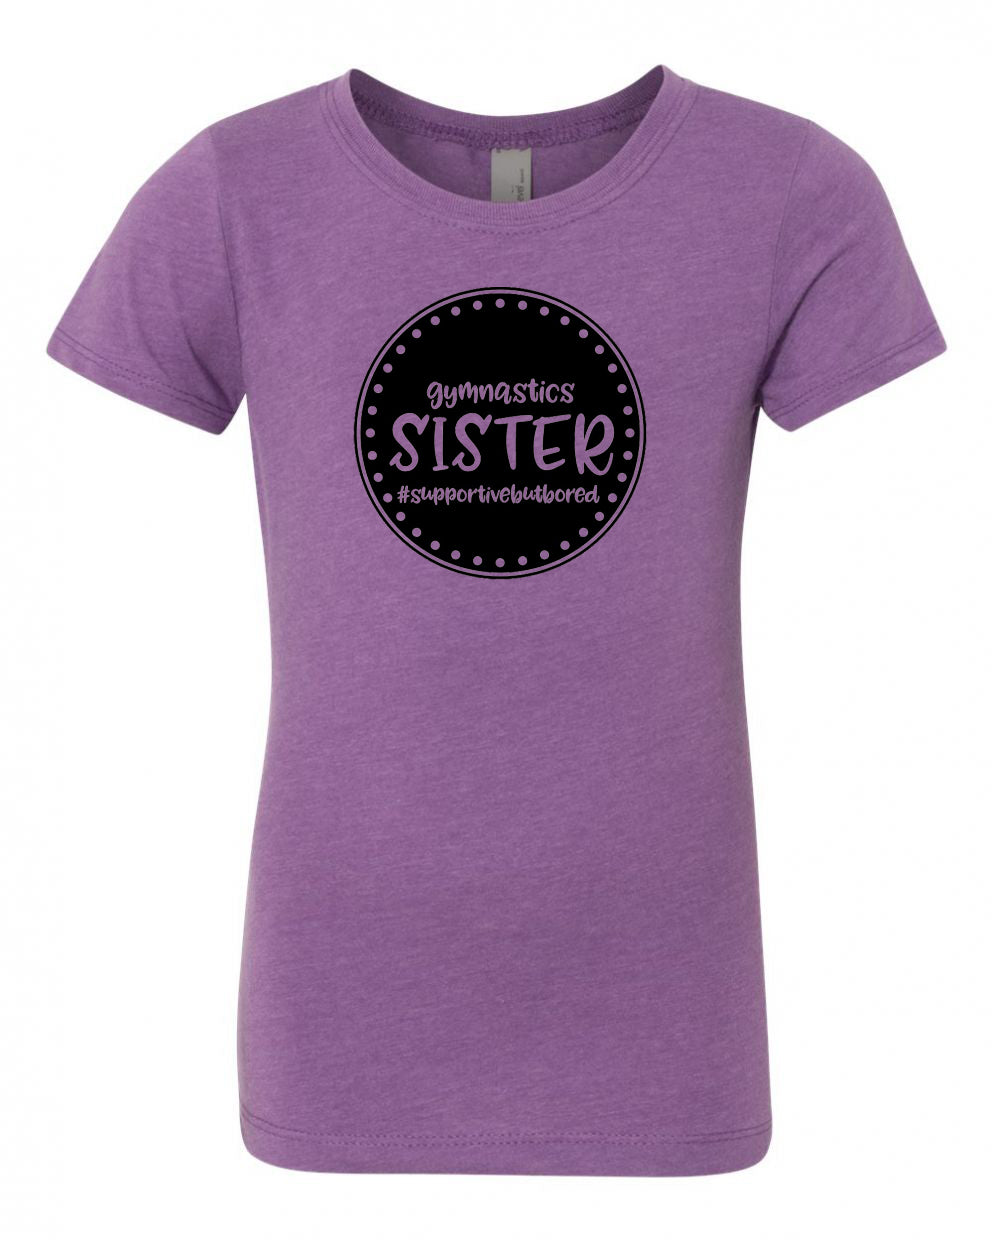 Gymnastics Sister Girls T-Shirt Purple Berry